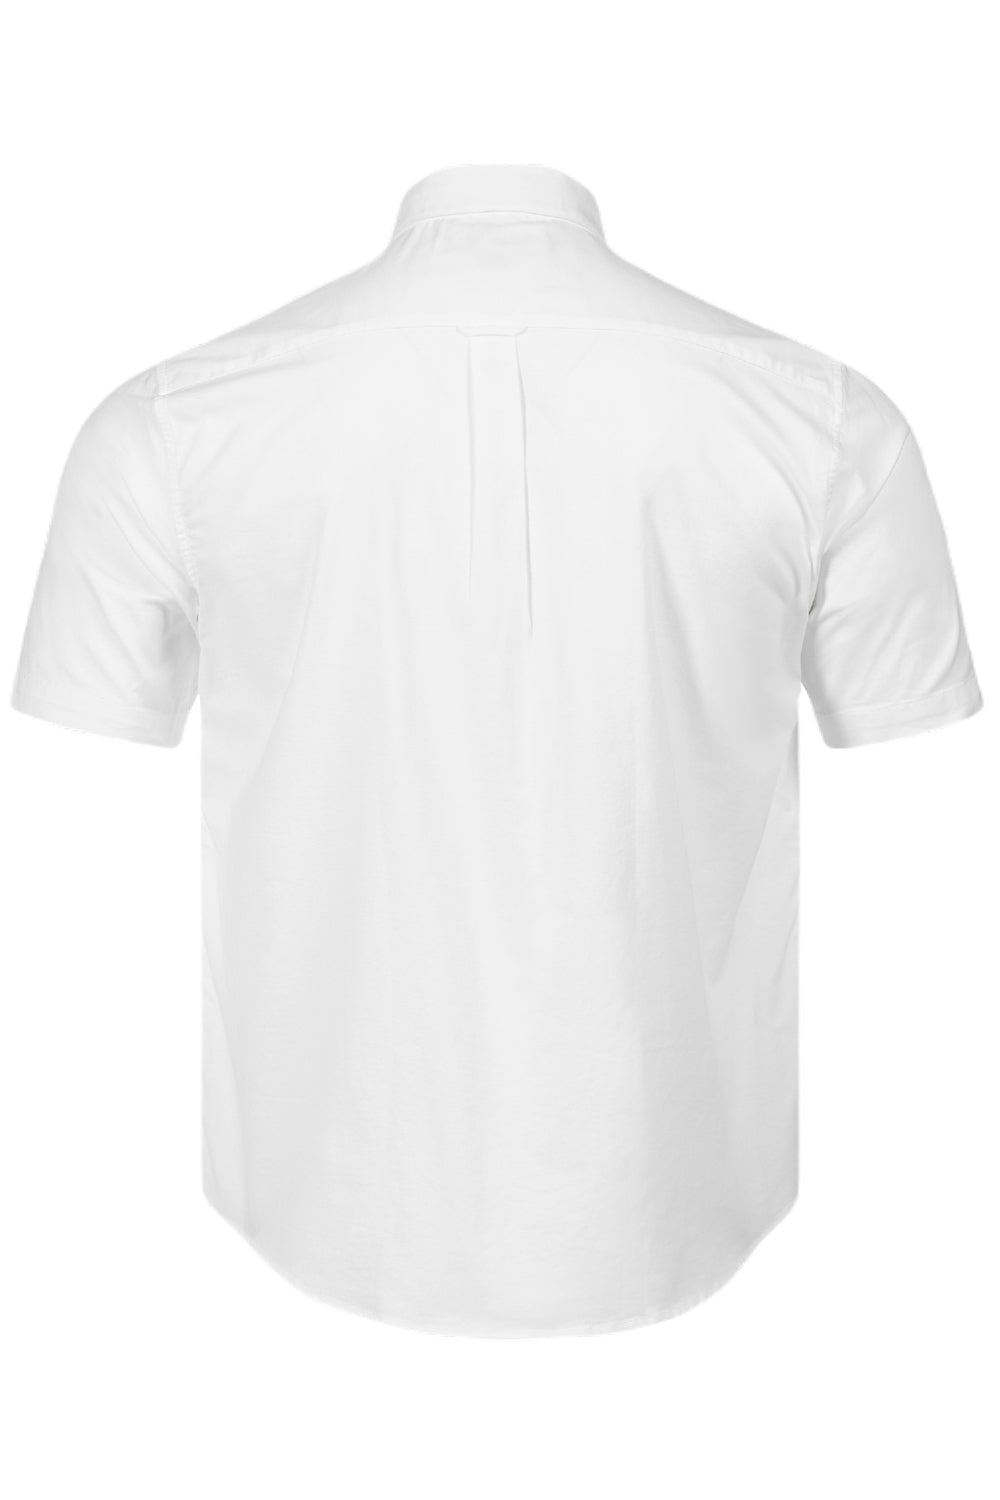 Musto Men Essential Short Sleeve Oxford Shirt in White